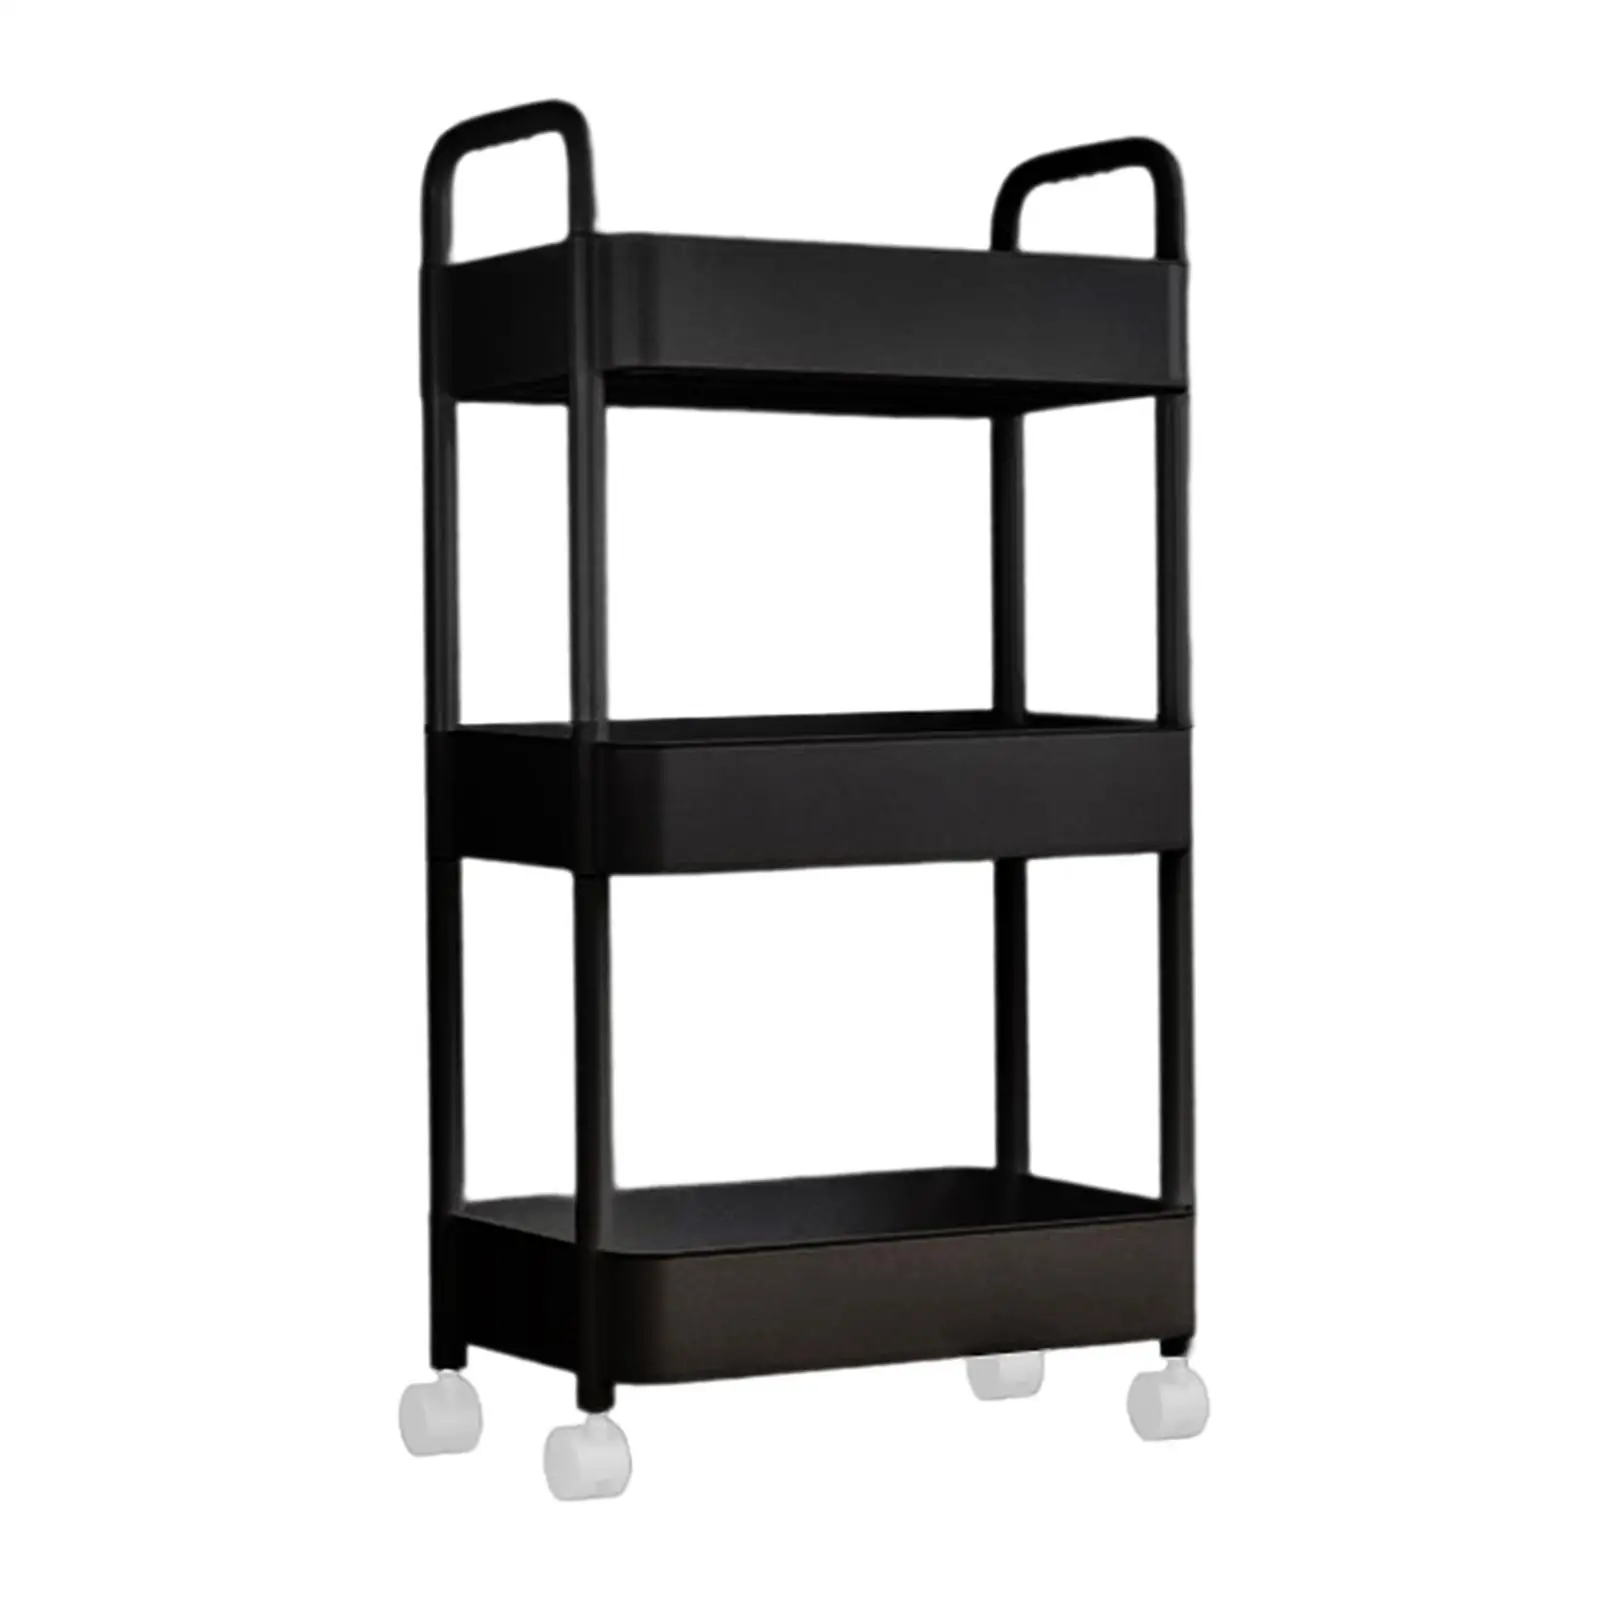 Organizer Rack Practical Wear Resistant Decorative Storage Shelf for Office